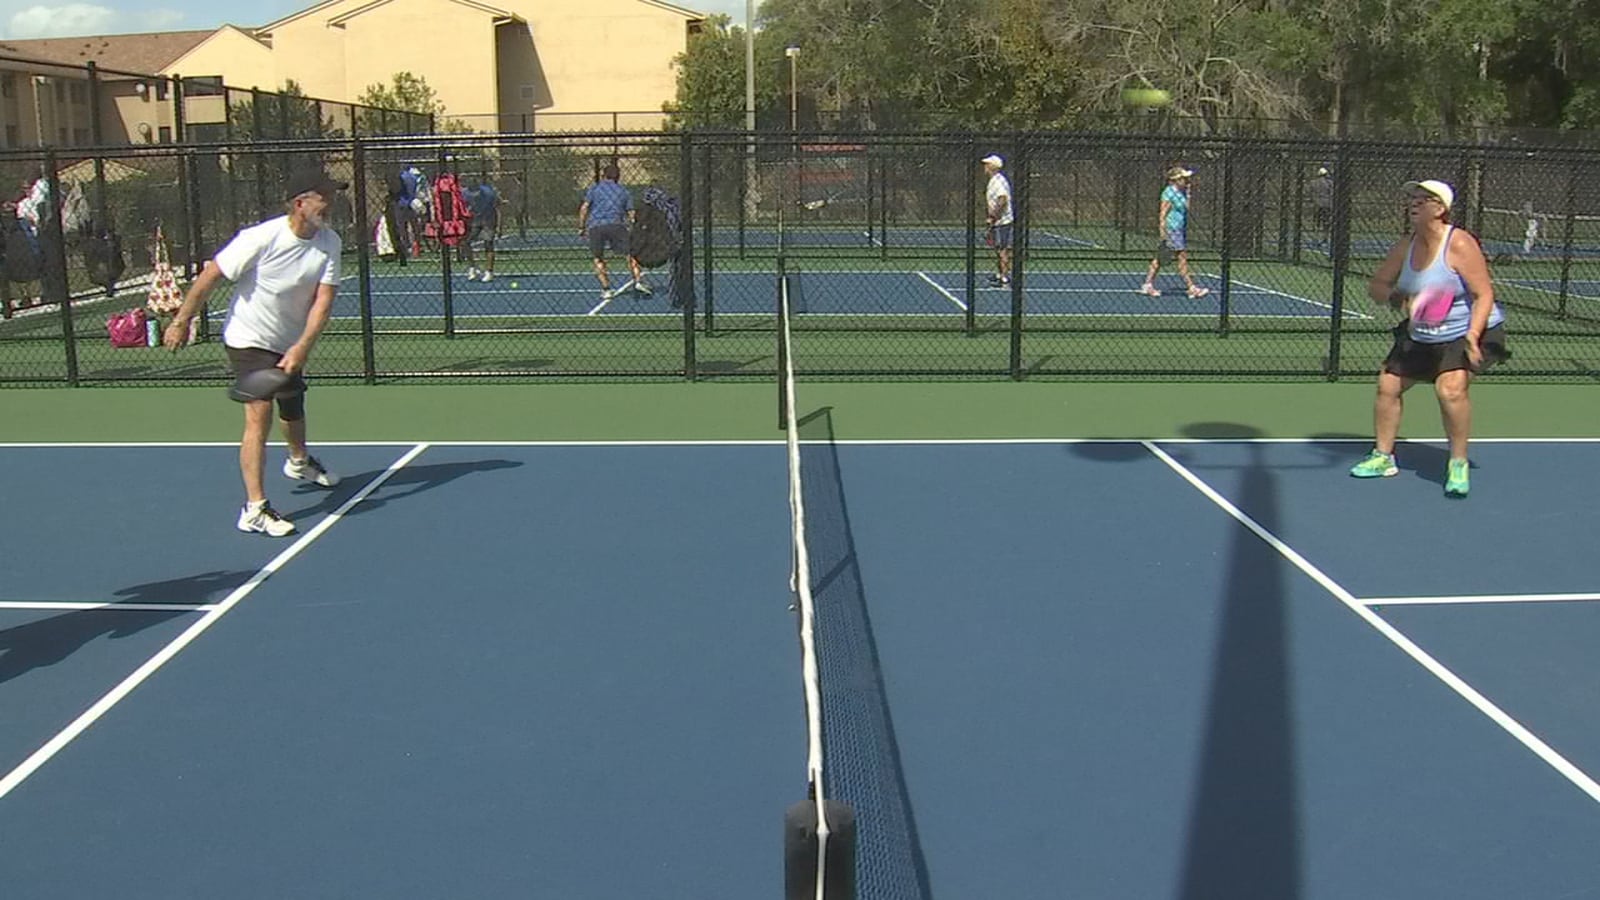 6 new pickleball courts open in Orlando WFTV